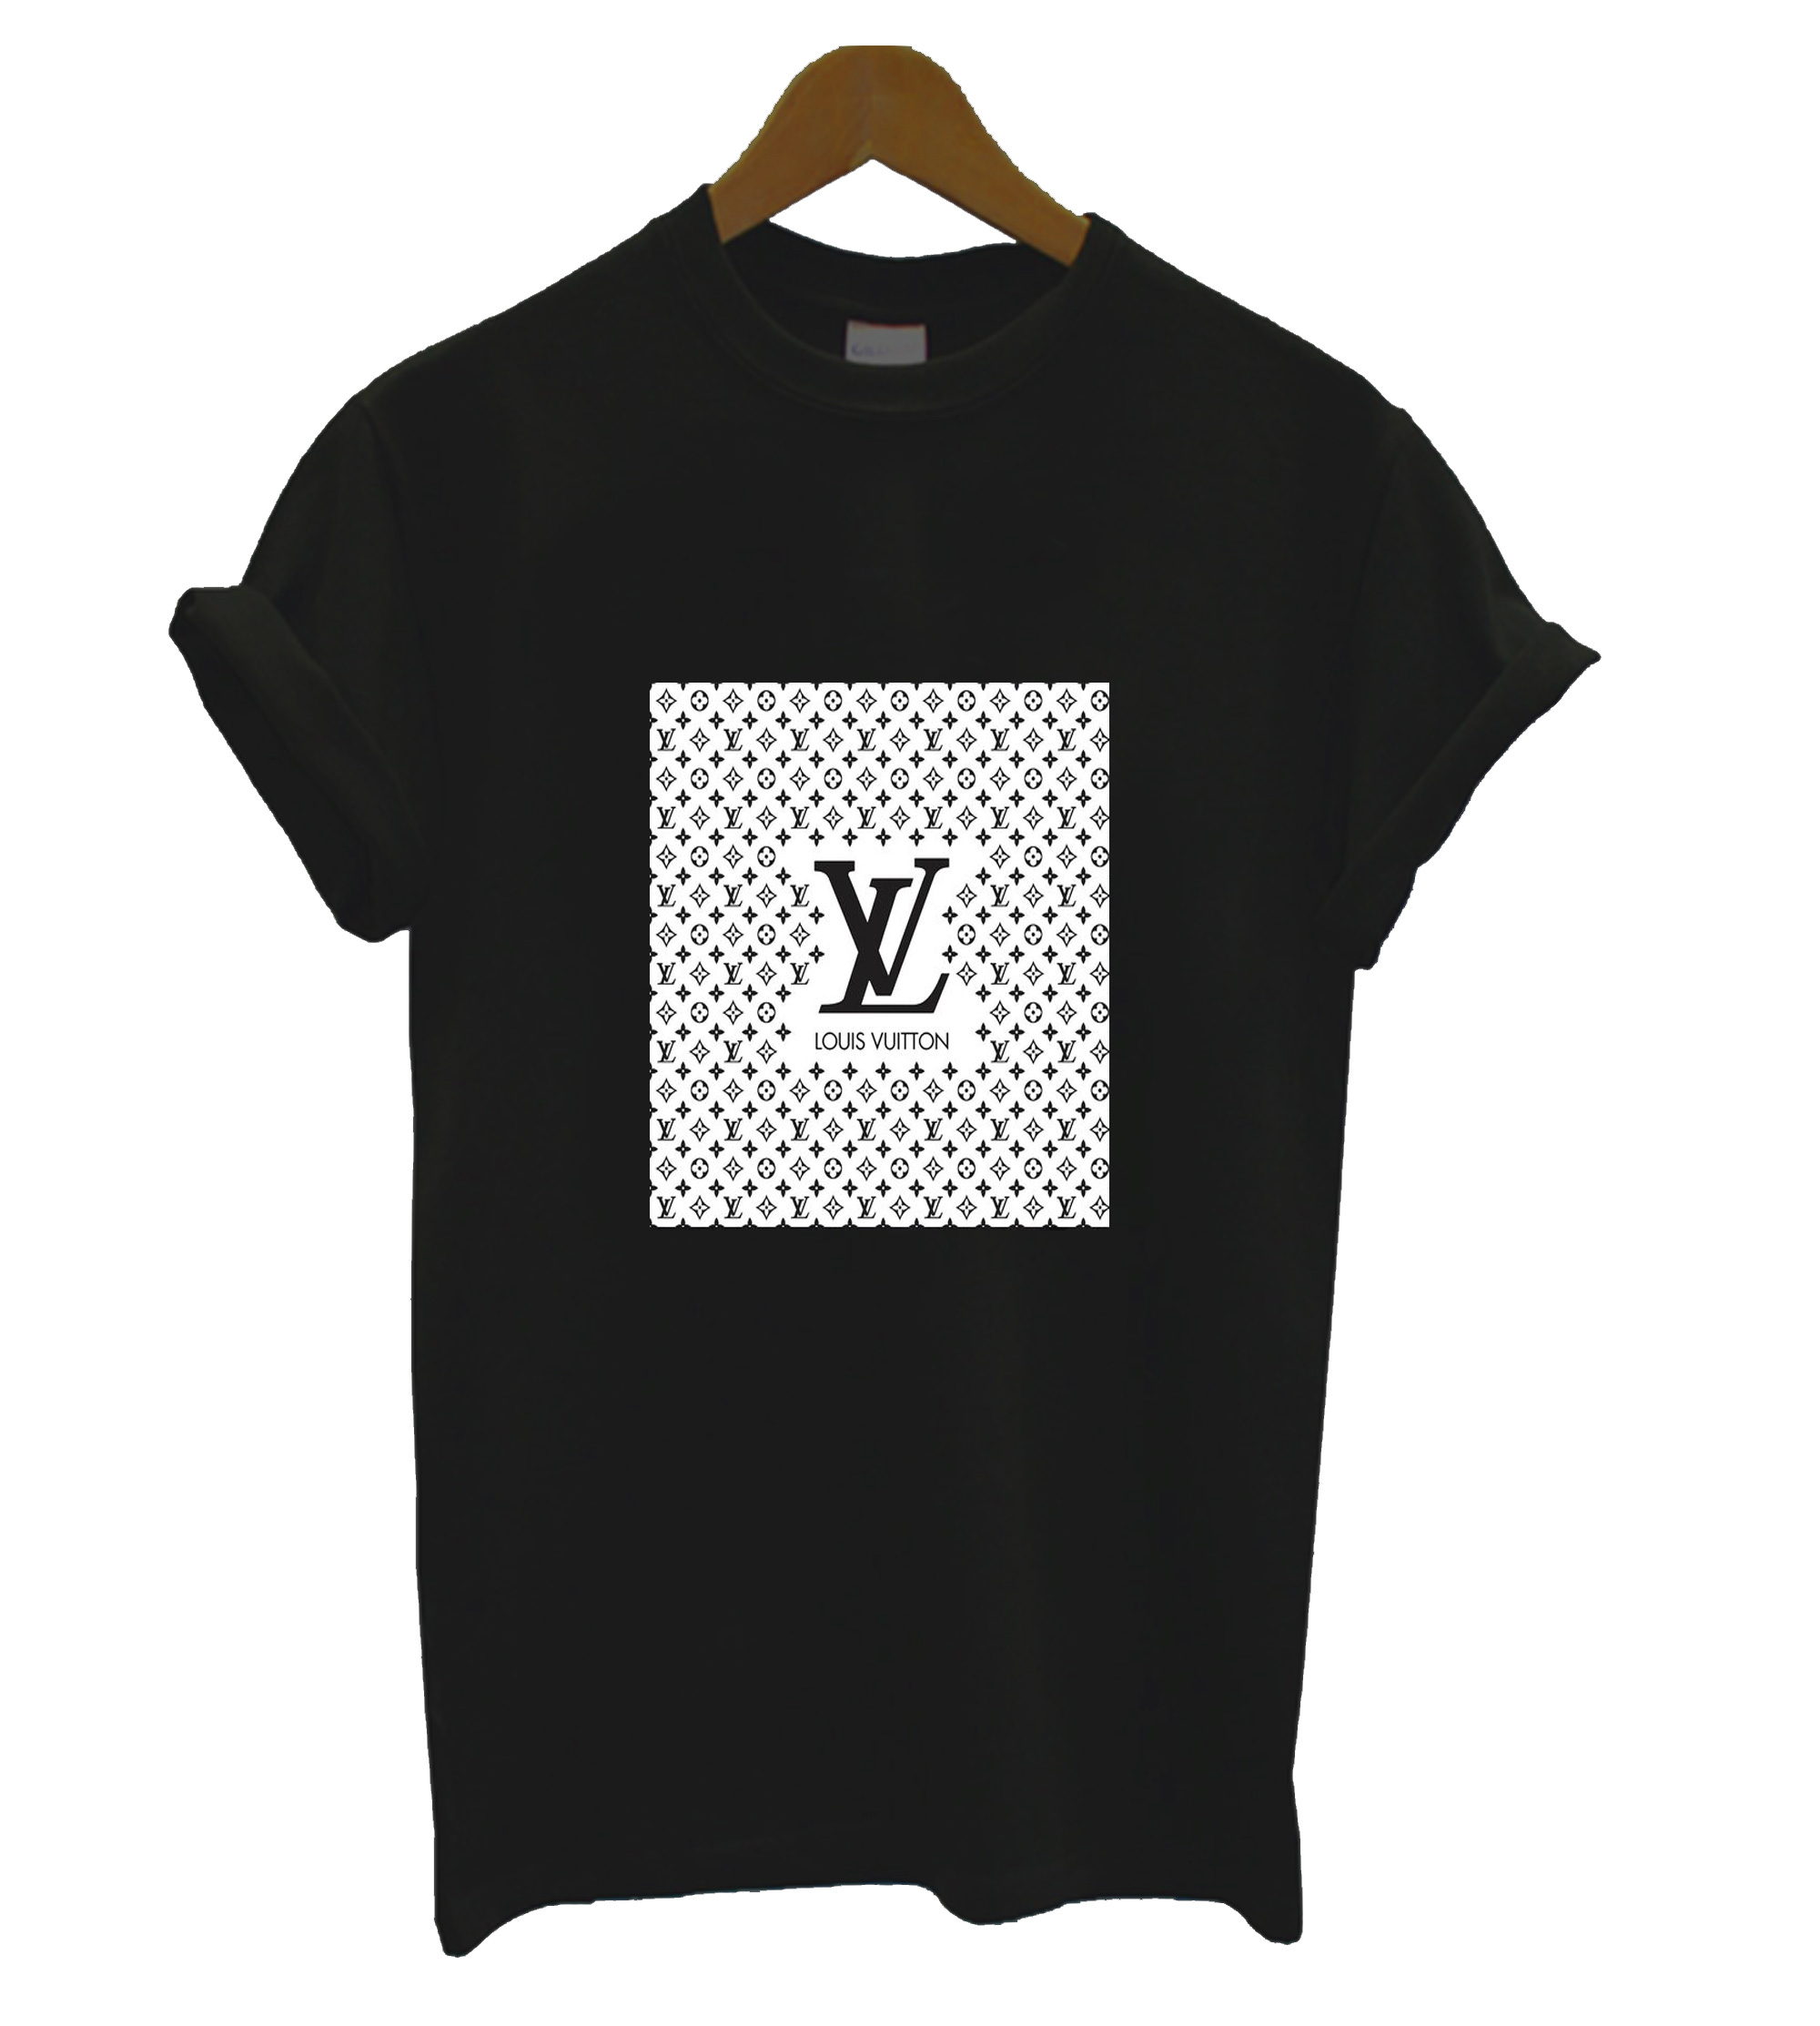 LV Louis Vuitton T Shirt